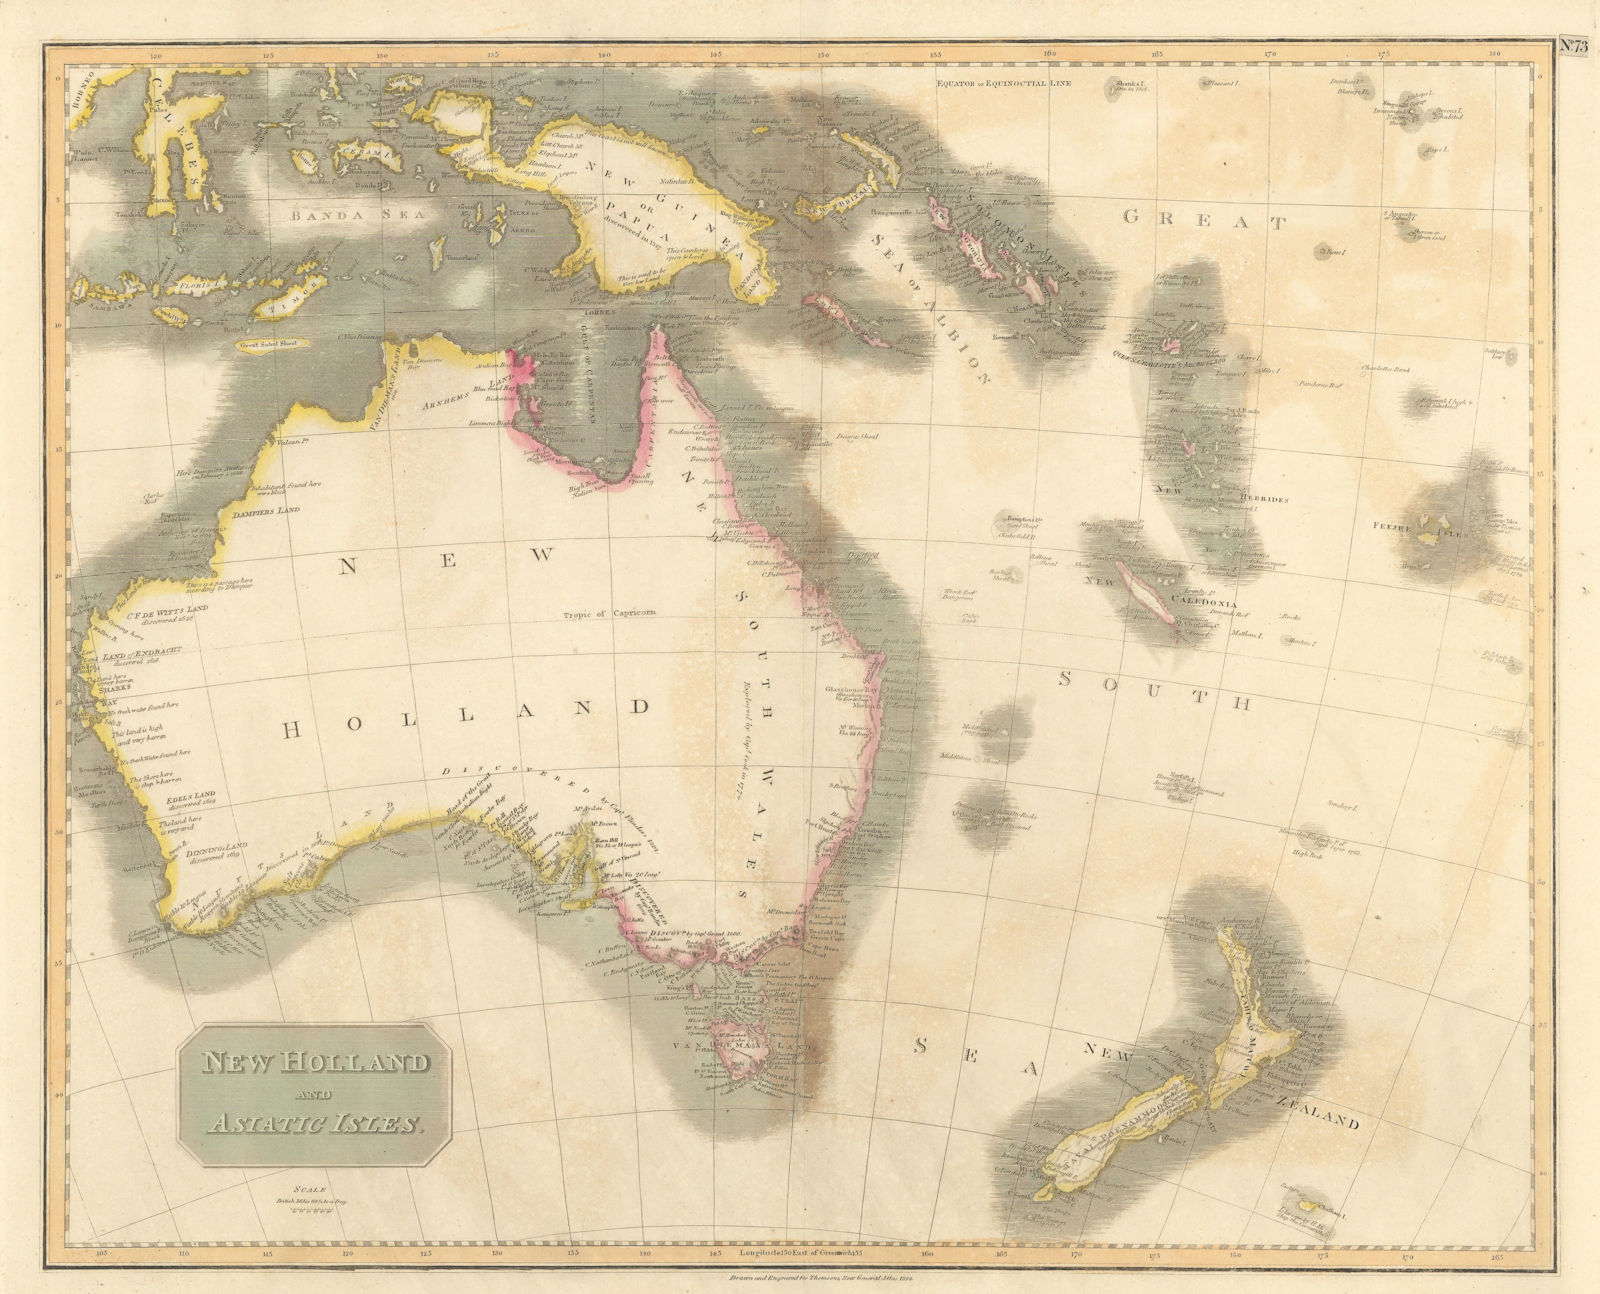 Associate Product "New Holland & Asiatic islands" Australia New Zealand Melanesia THOMSON 1817 map